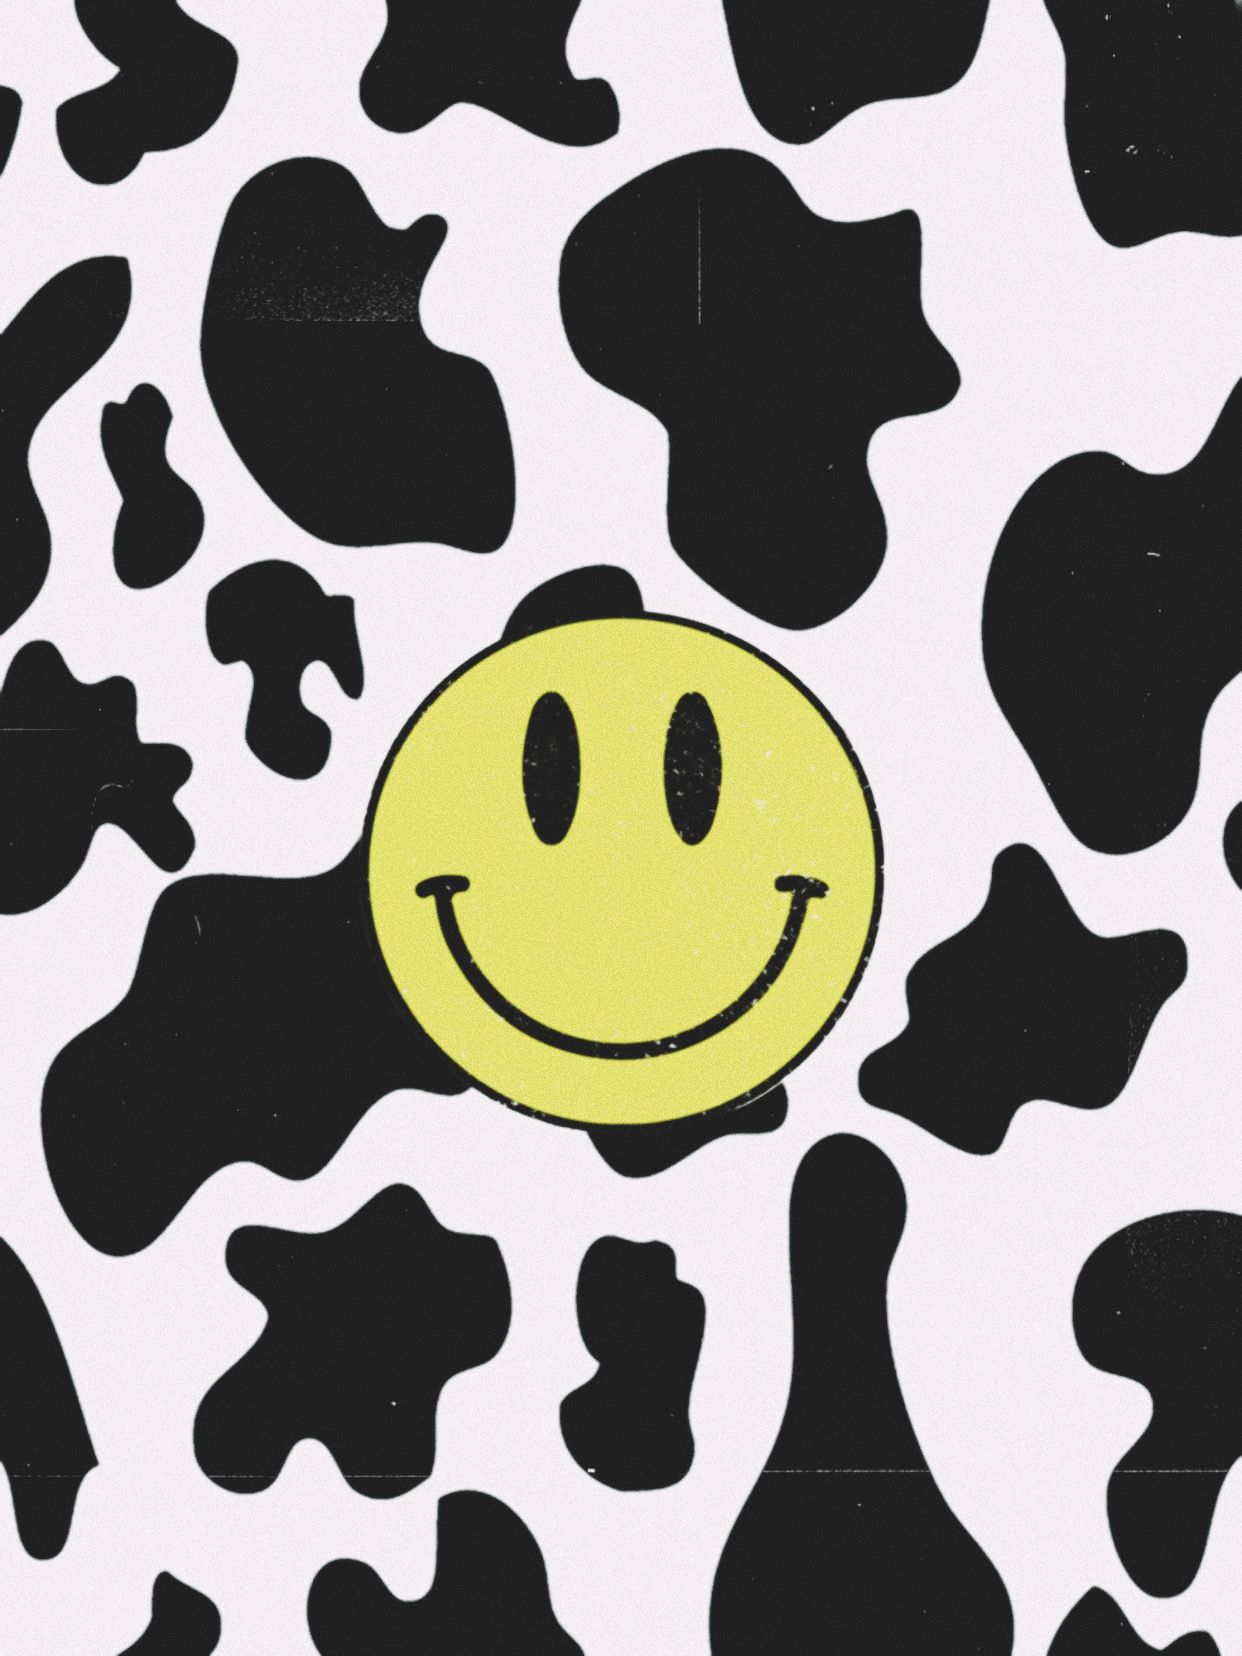 Smiley face wallpaper. Cow wallpaper, Edgy wallpaper, iPhone wallpaper pattern